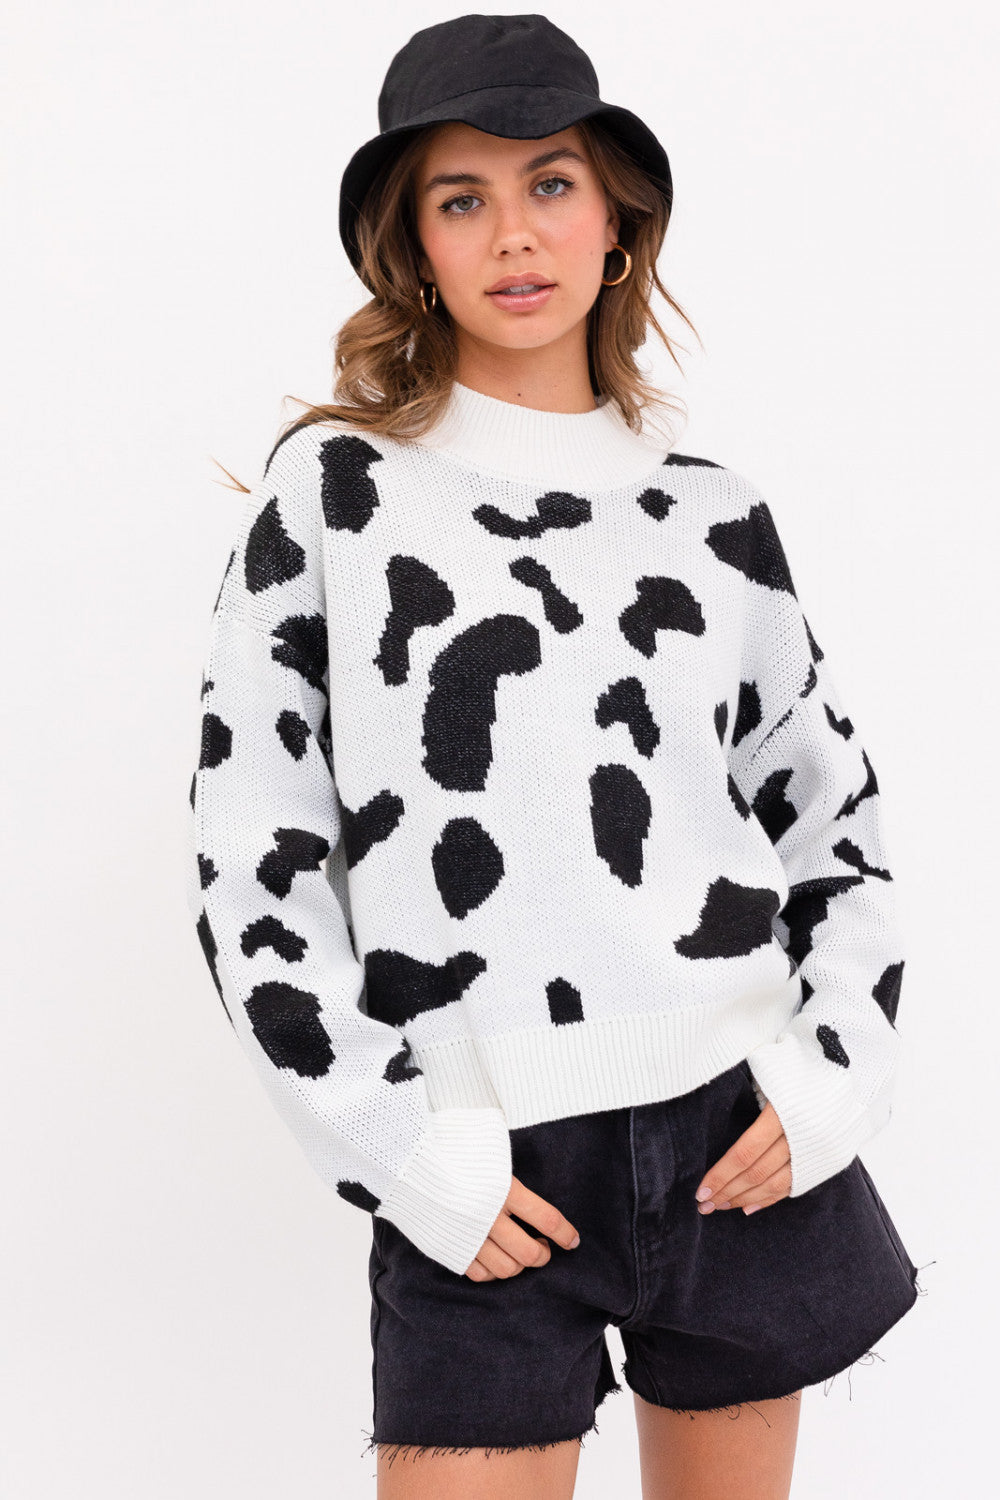 Black and White Animal Print Sweater